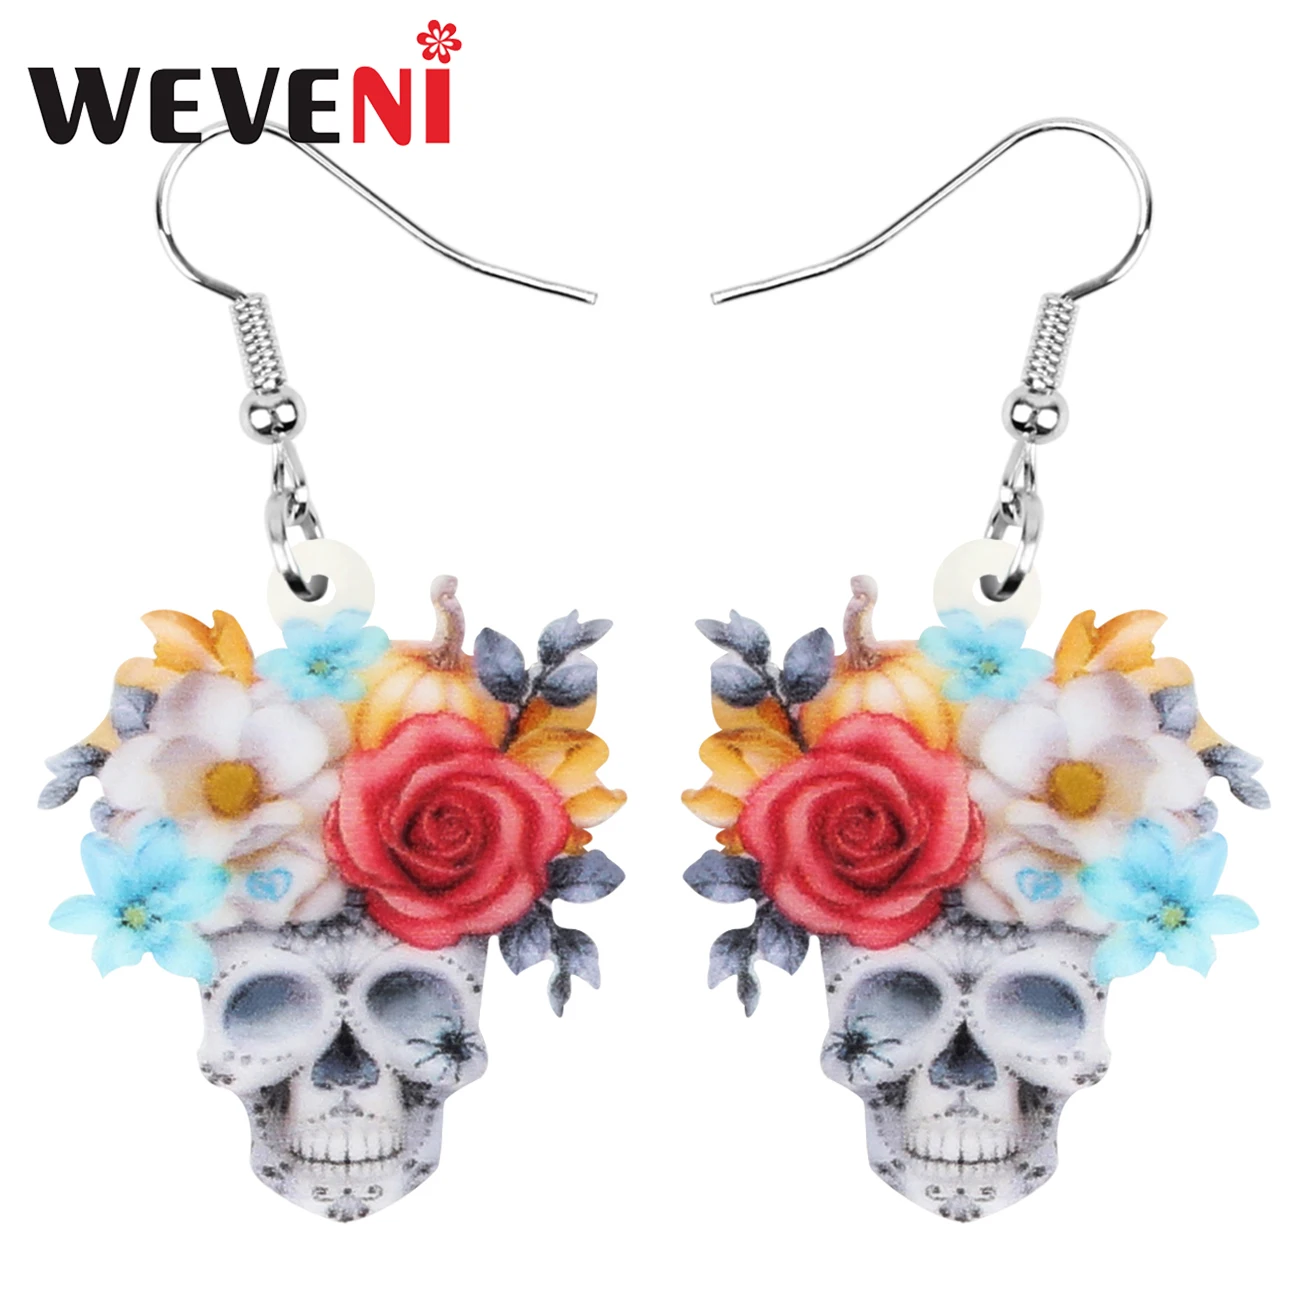 

WEVENI Acrylic Halloween Skeleton Skull Earrings Flower Elegant Dangle Drop Jewelry For Women Girls Friends Funny Festival Gift